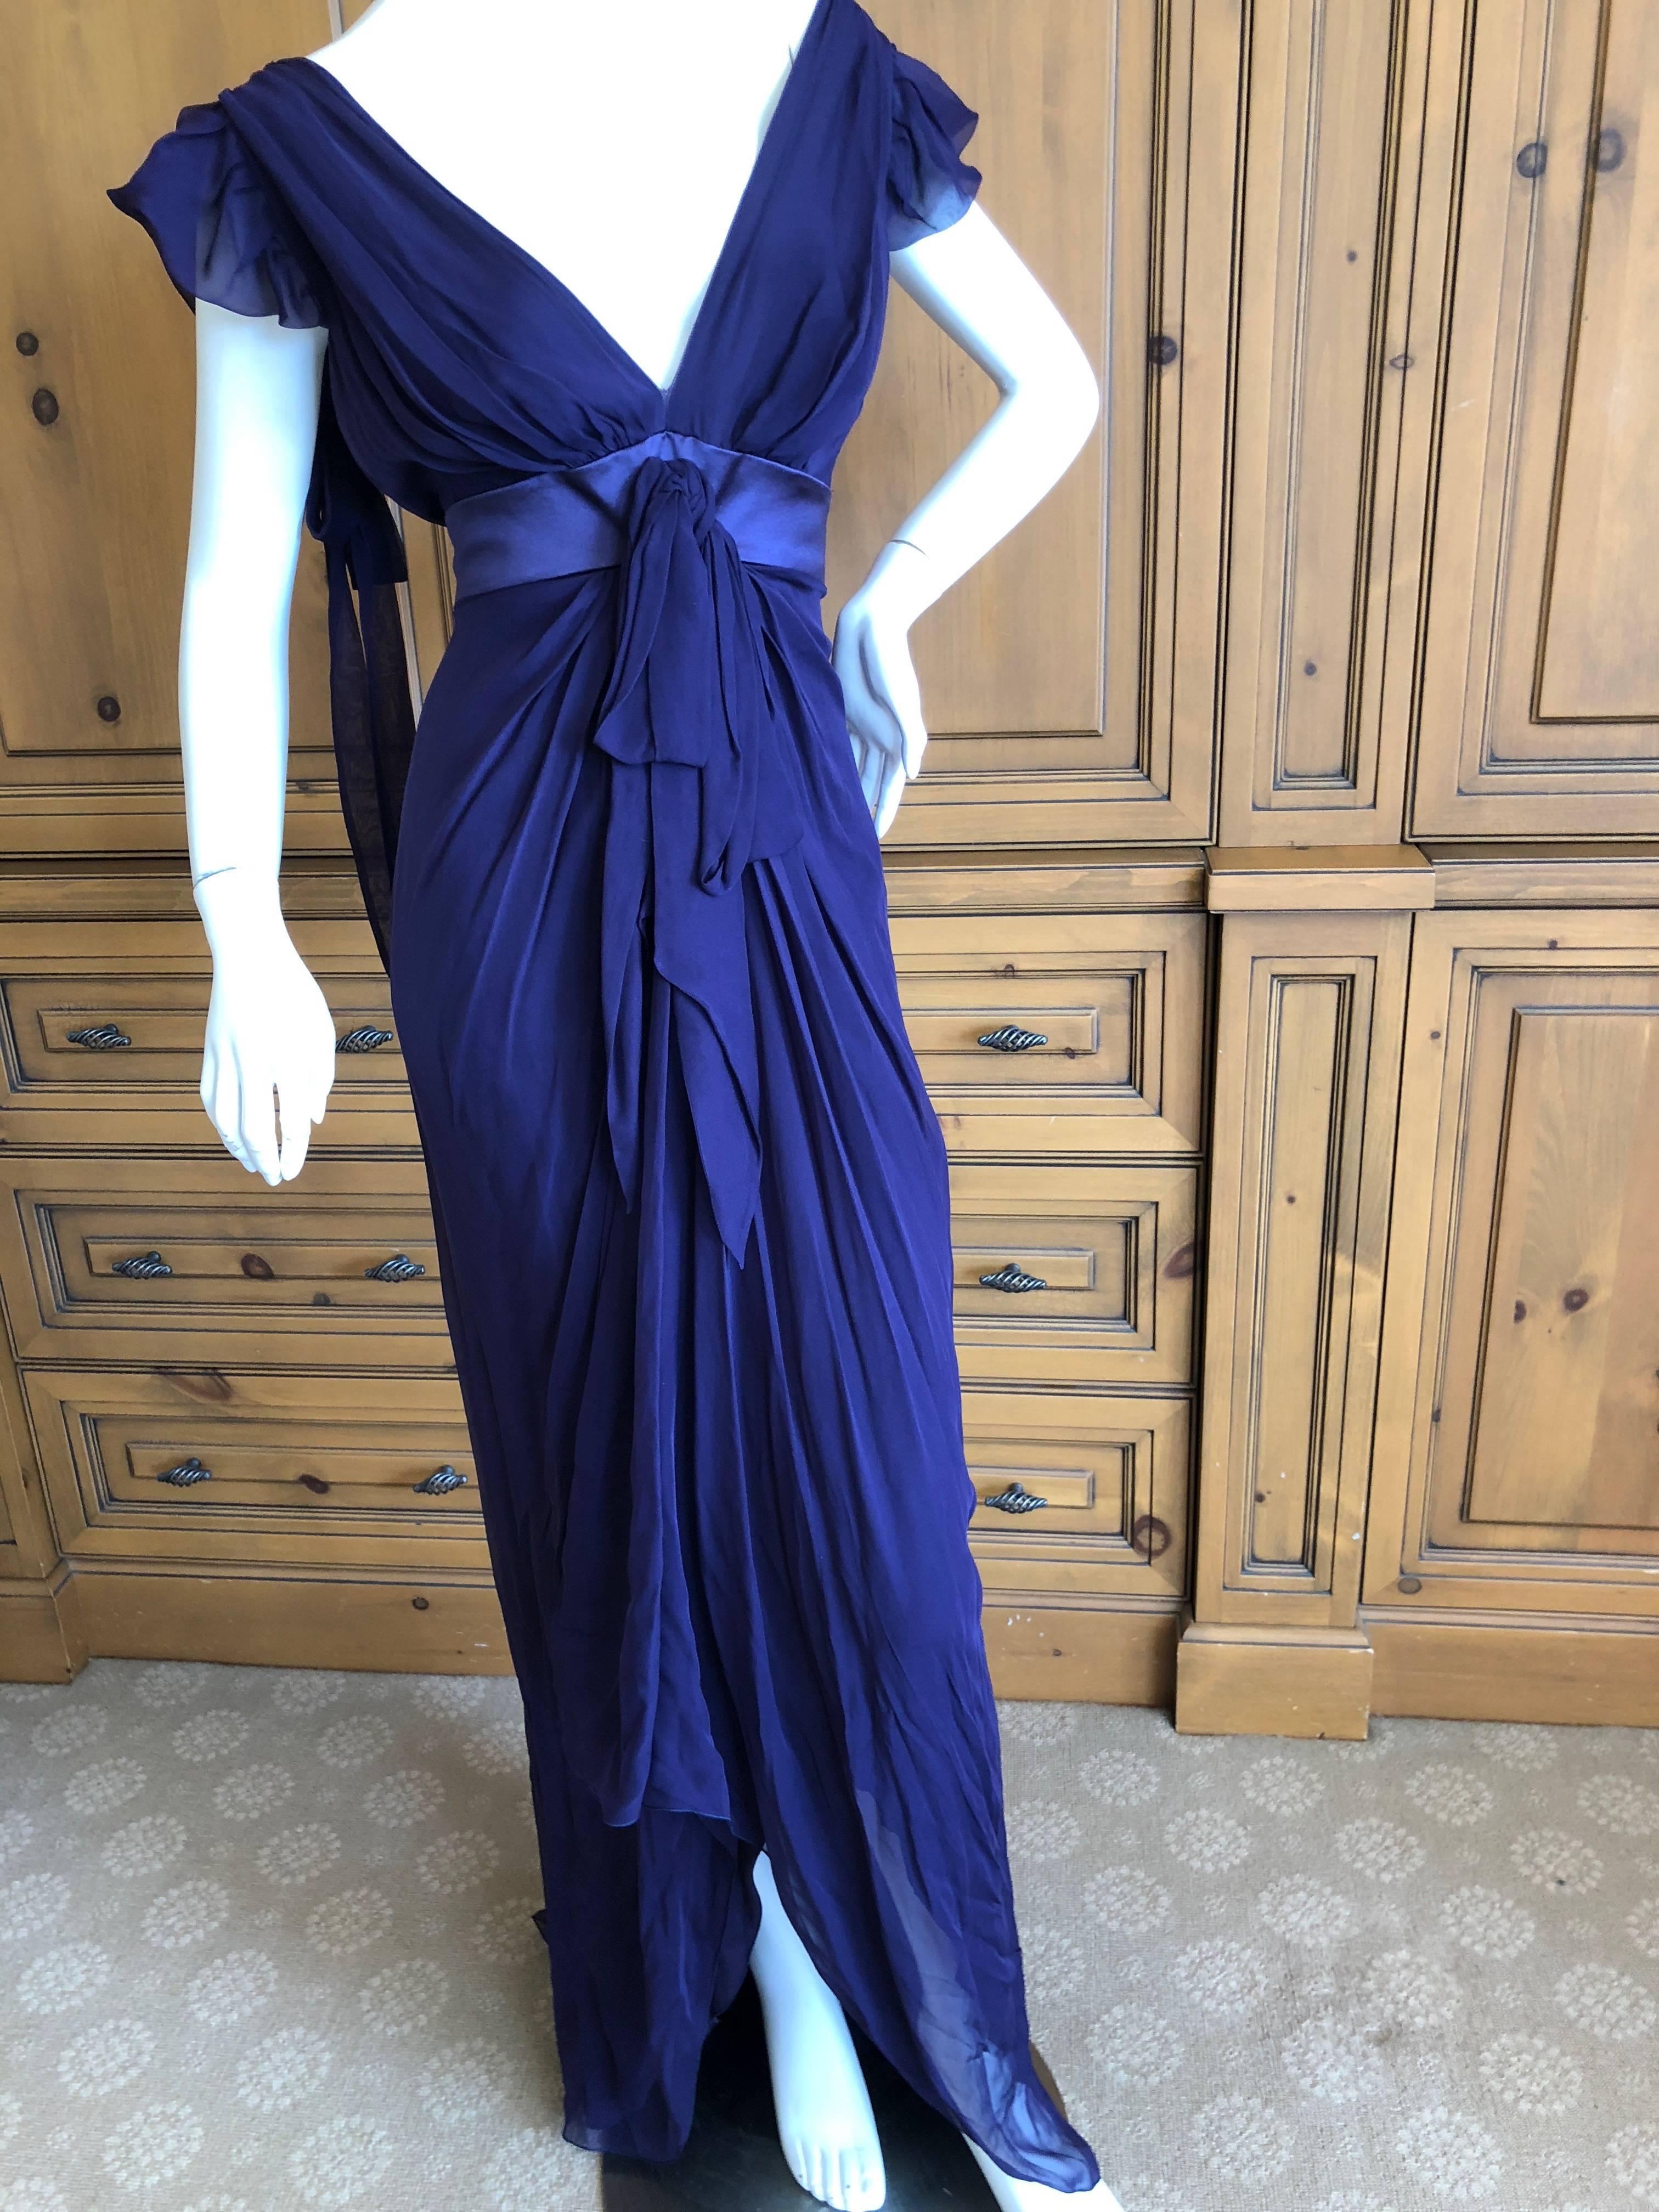 Christian Lacroix low cut vintage evening dress in rich dark purple silk chiffon.

Size 42
Bust 40